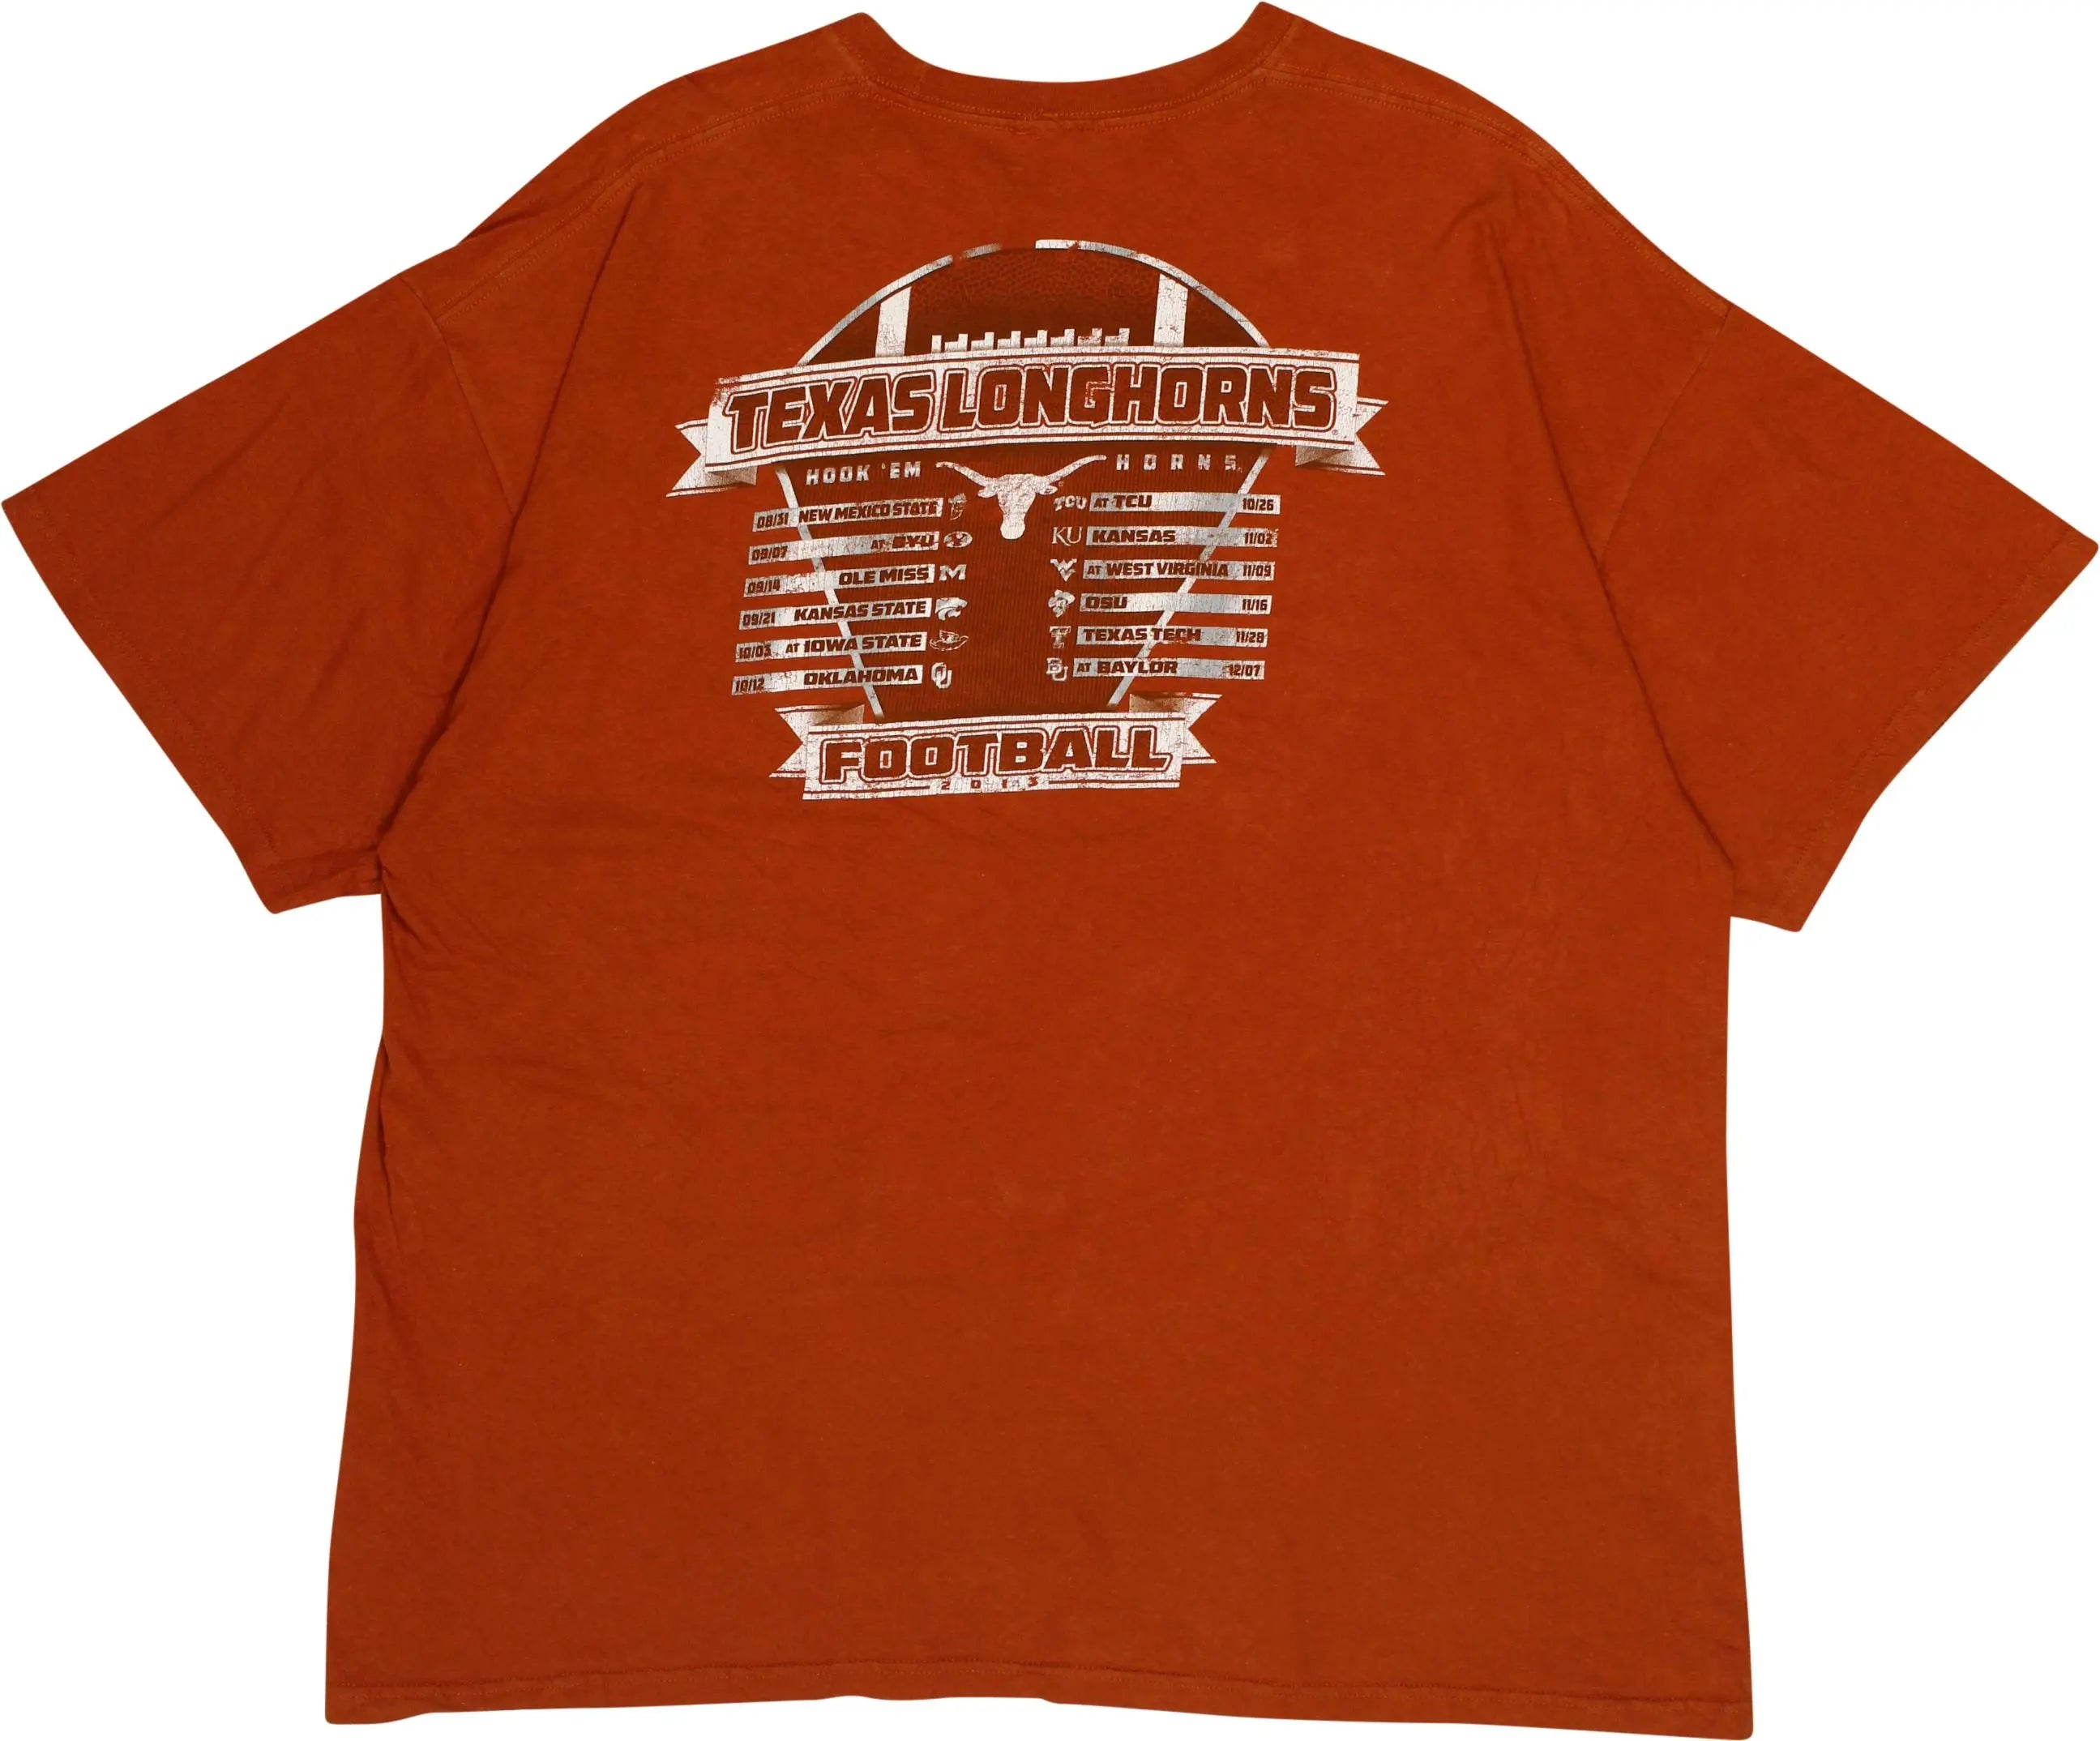 Viatran - Texas Longhorns T-Shirt- ThriftTale.com - Vintage and second handclothing